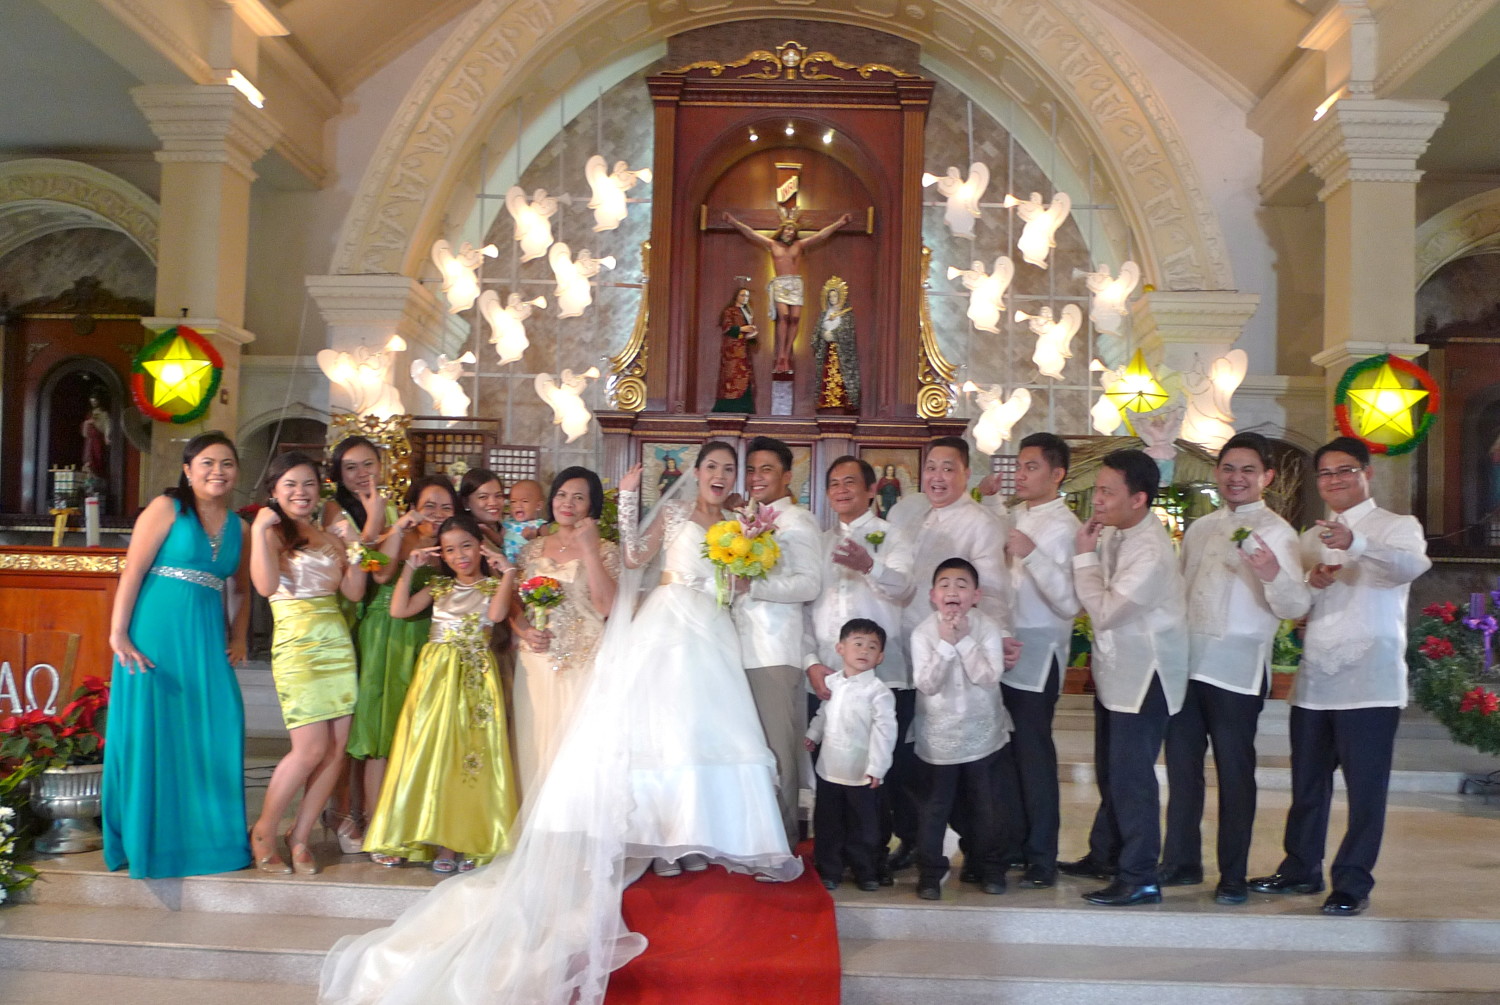 filipiniana wedding gown divisoria